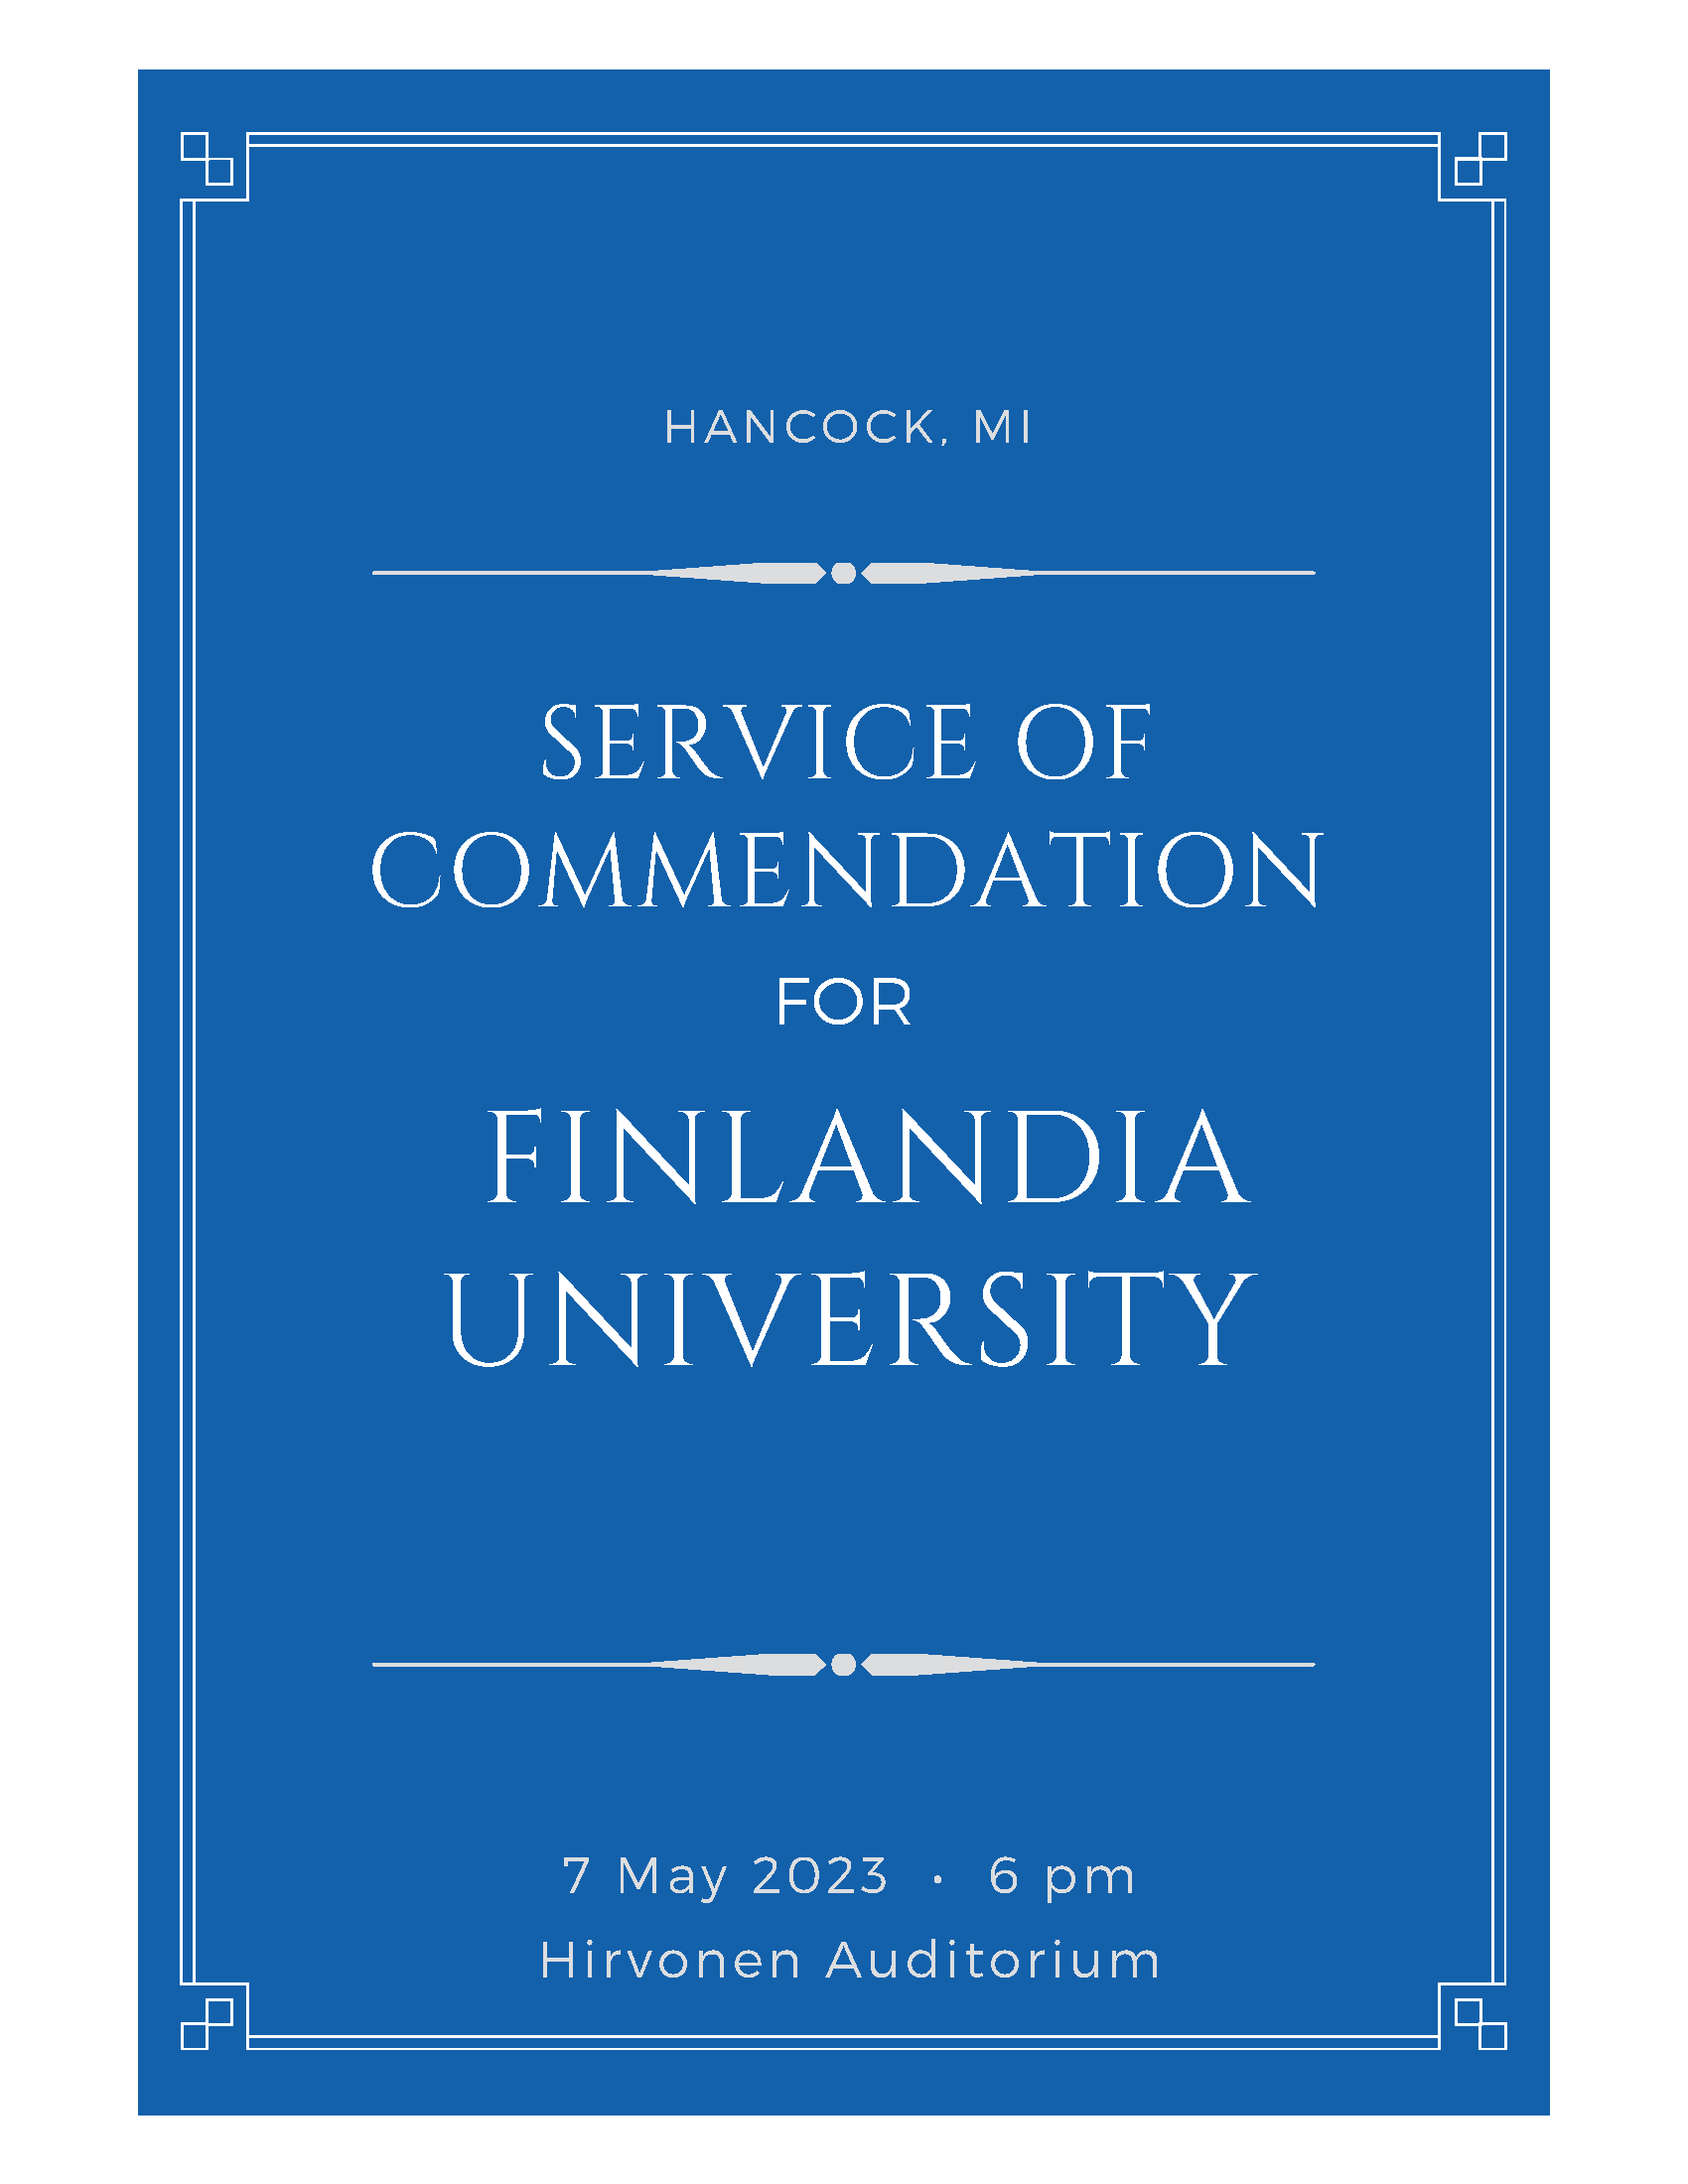 Service of Commendation. May 7, 6 p.m. at Hirvonen Auditorium